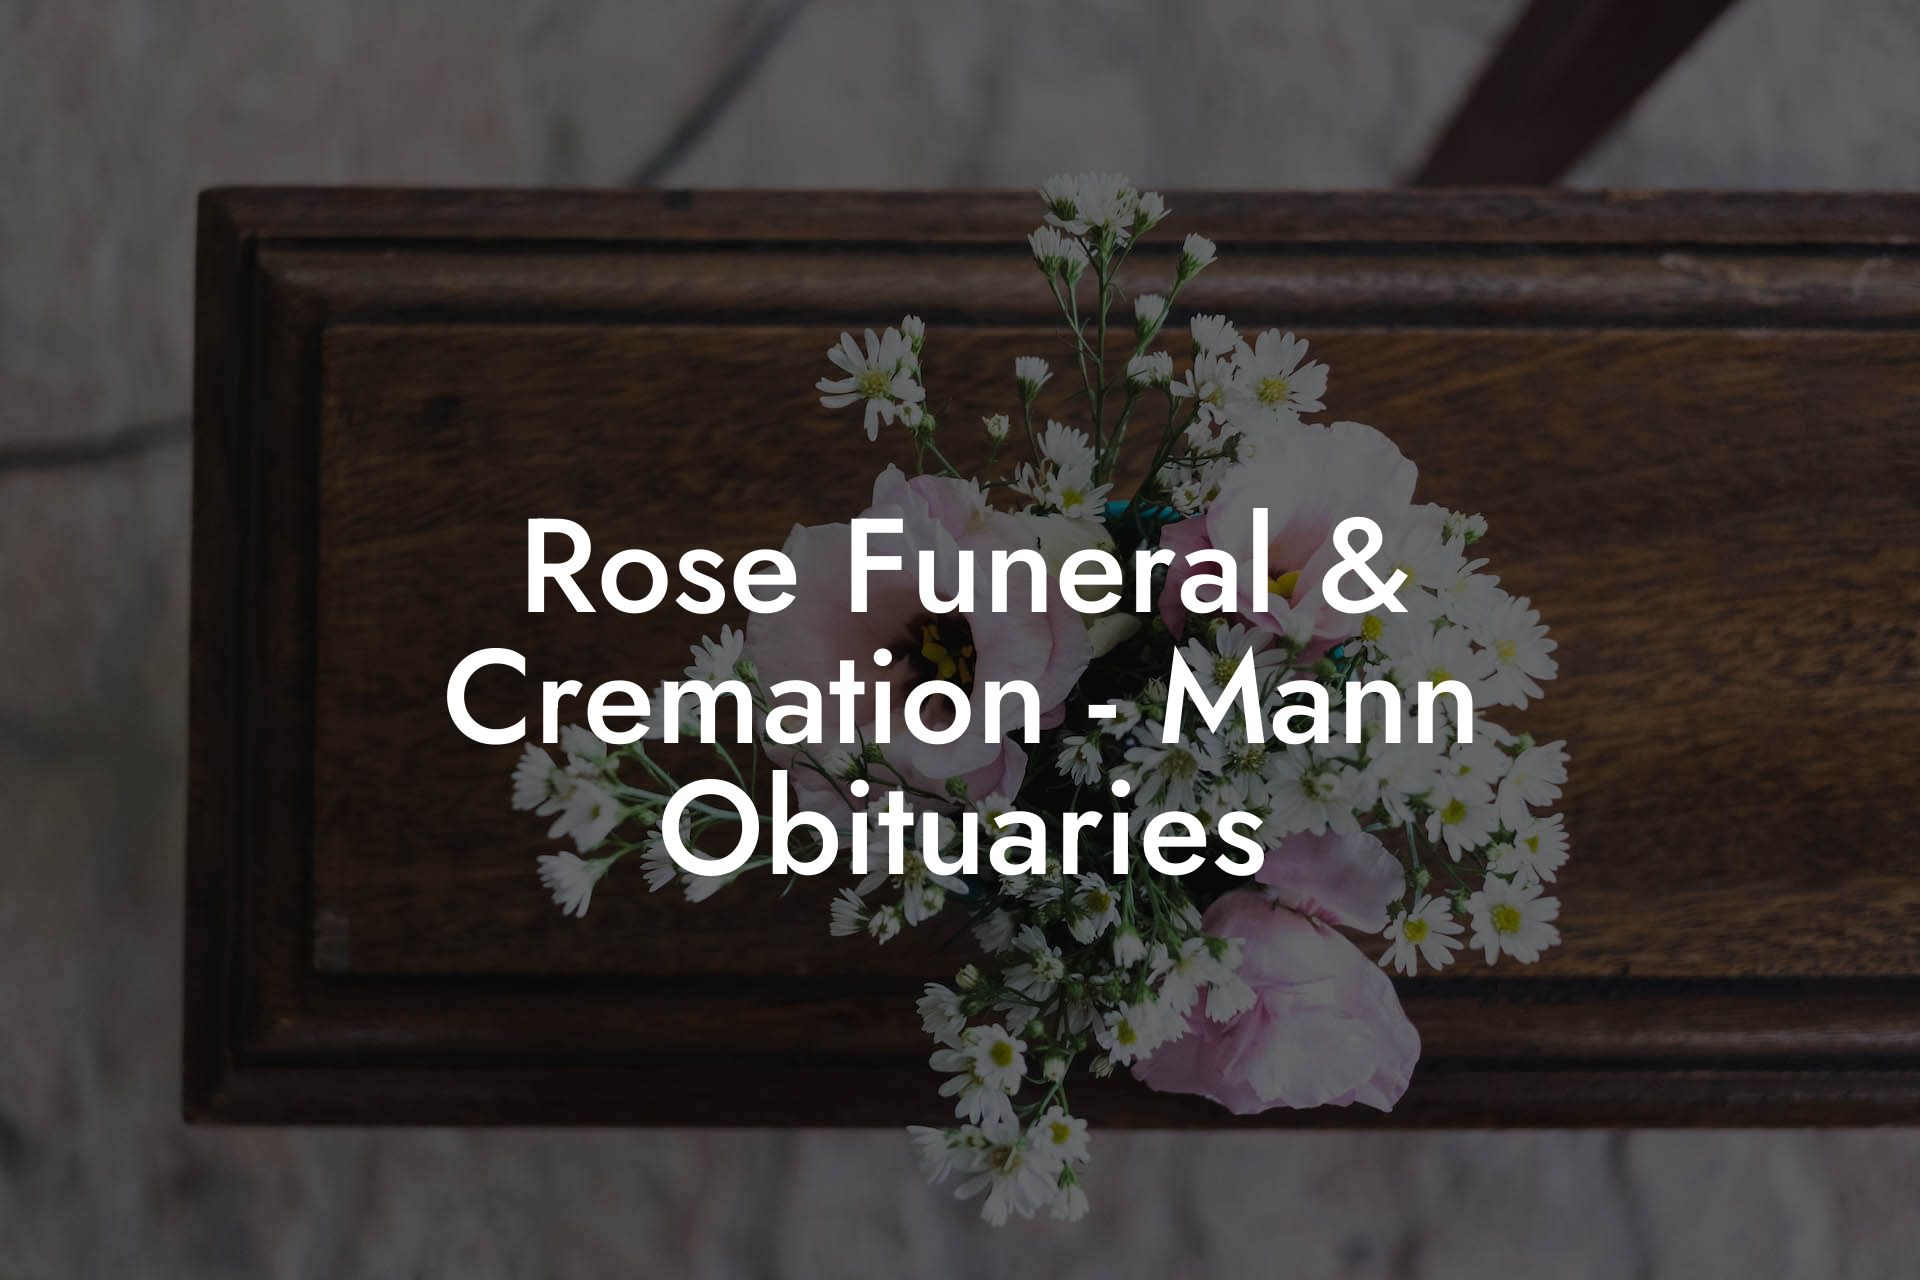 Rose Funeral & Cremation - Mann Obituaries